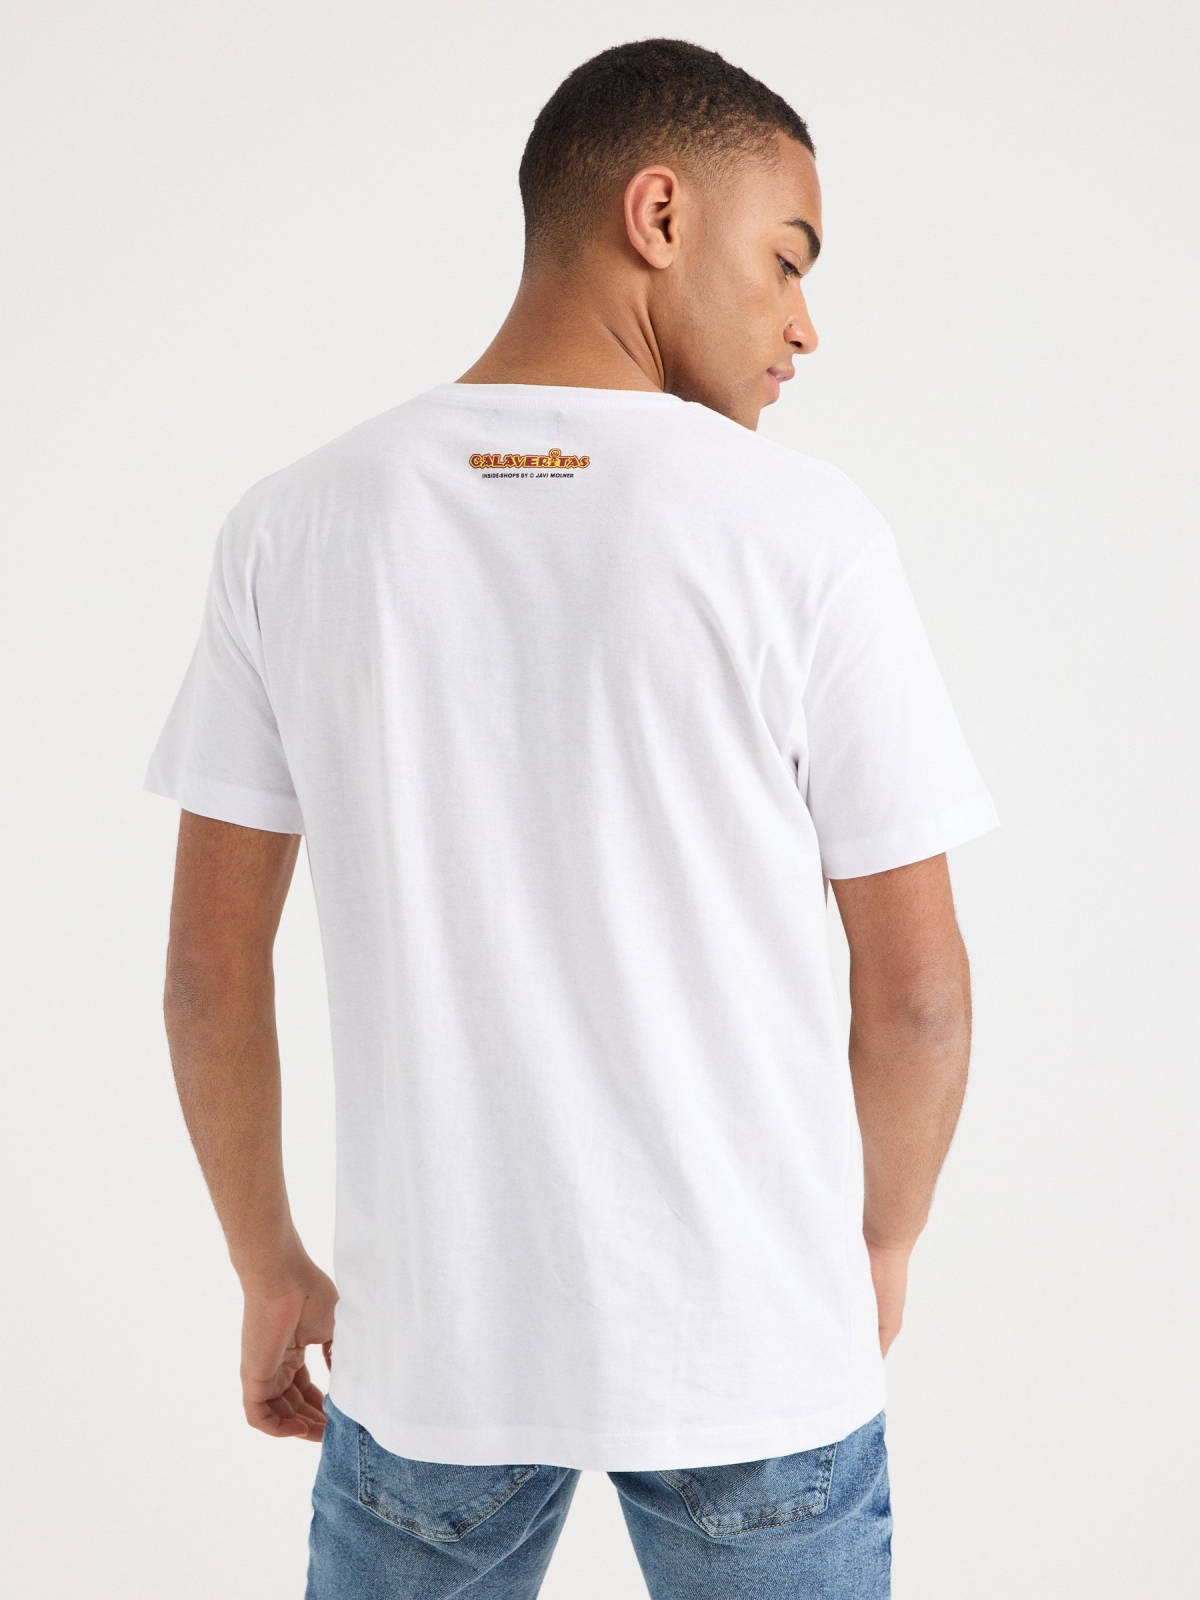 T-shirt Calaveritas Magics branco vista meia traseira